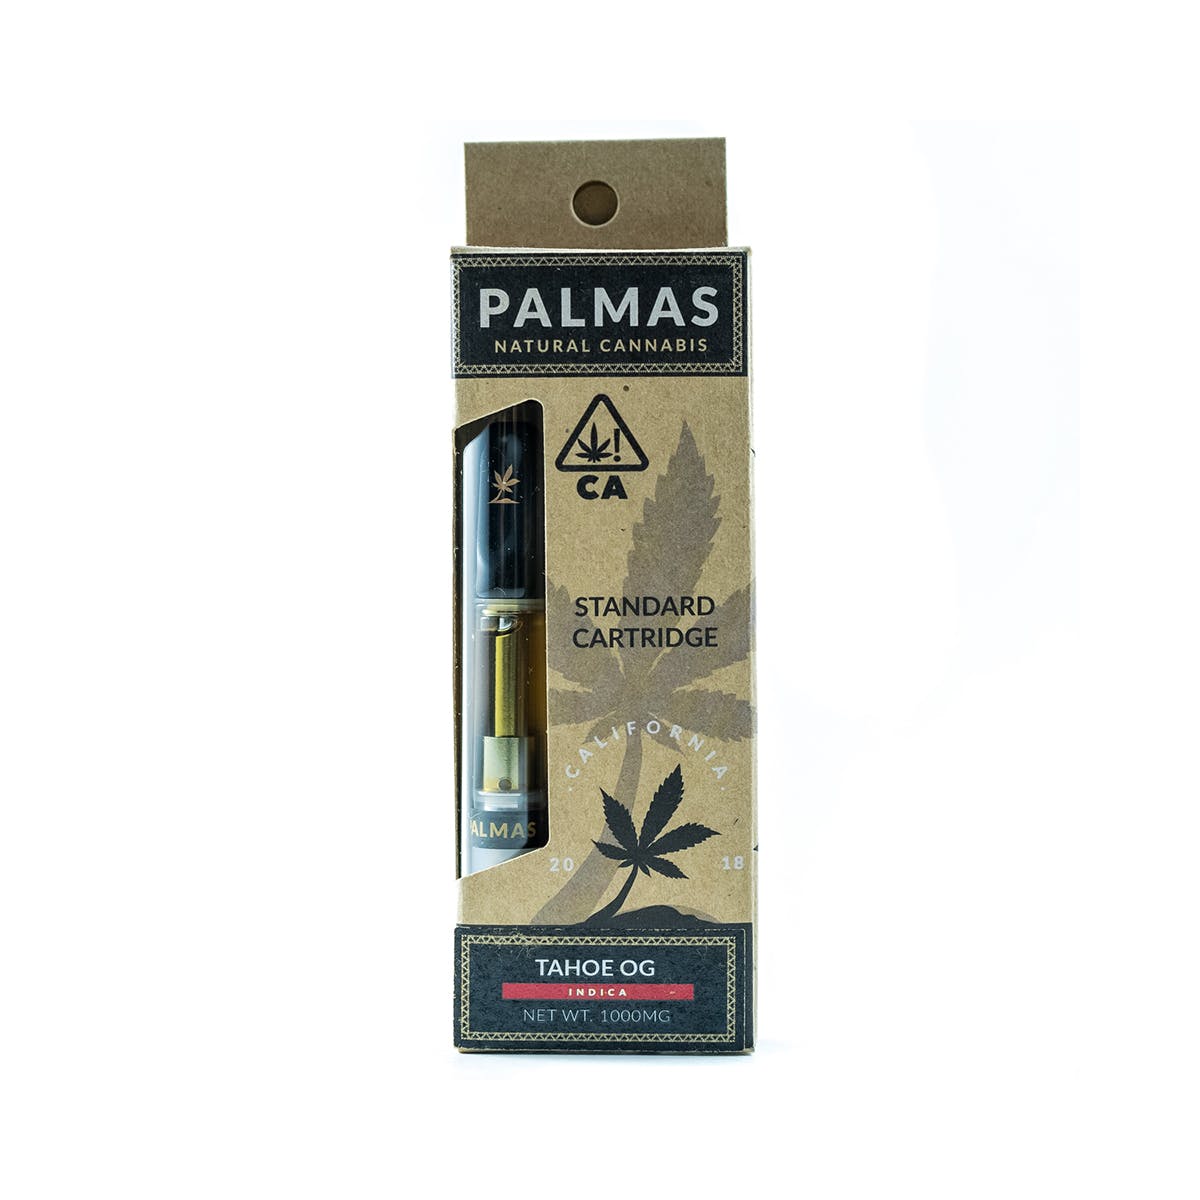 marijuana-dispensaries-og-central-20-cap-in-los-angeles-palmas-standard-cartridge-tahoe-og